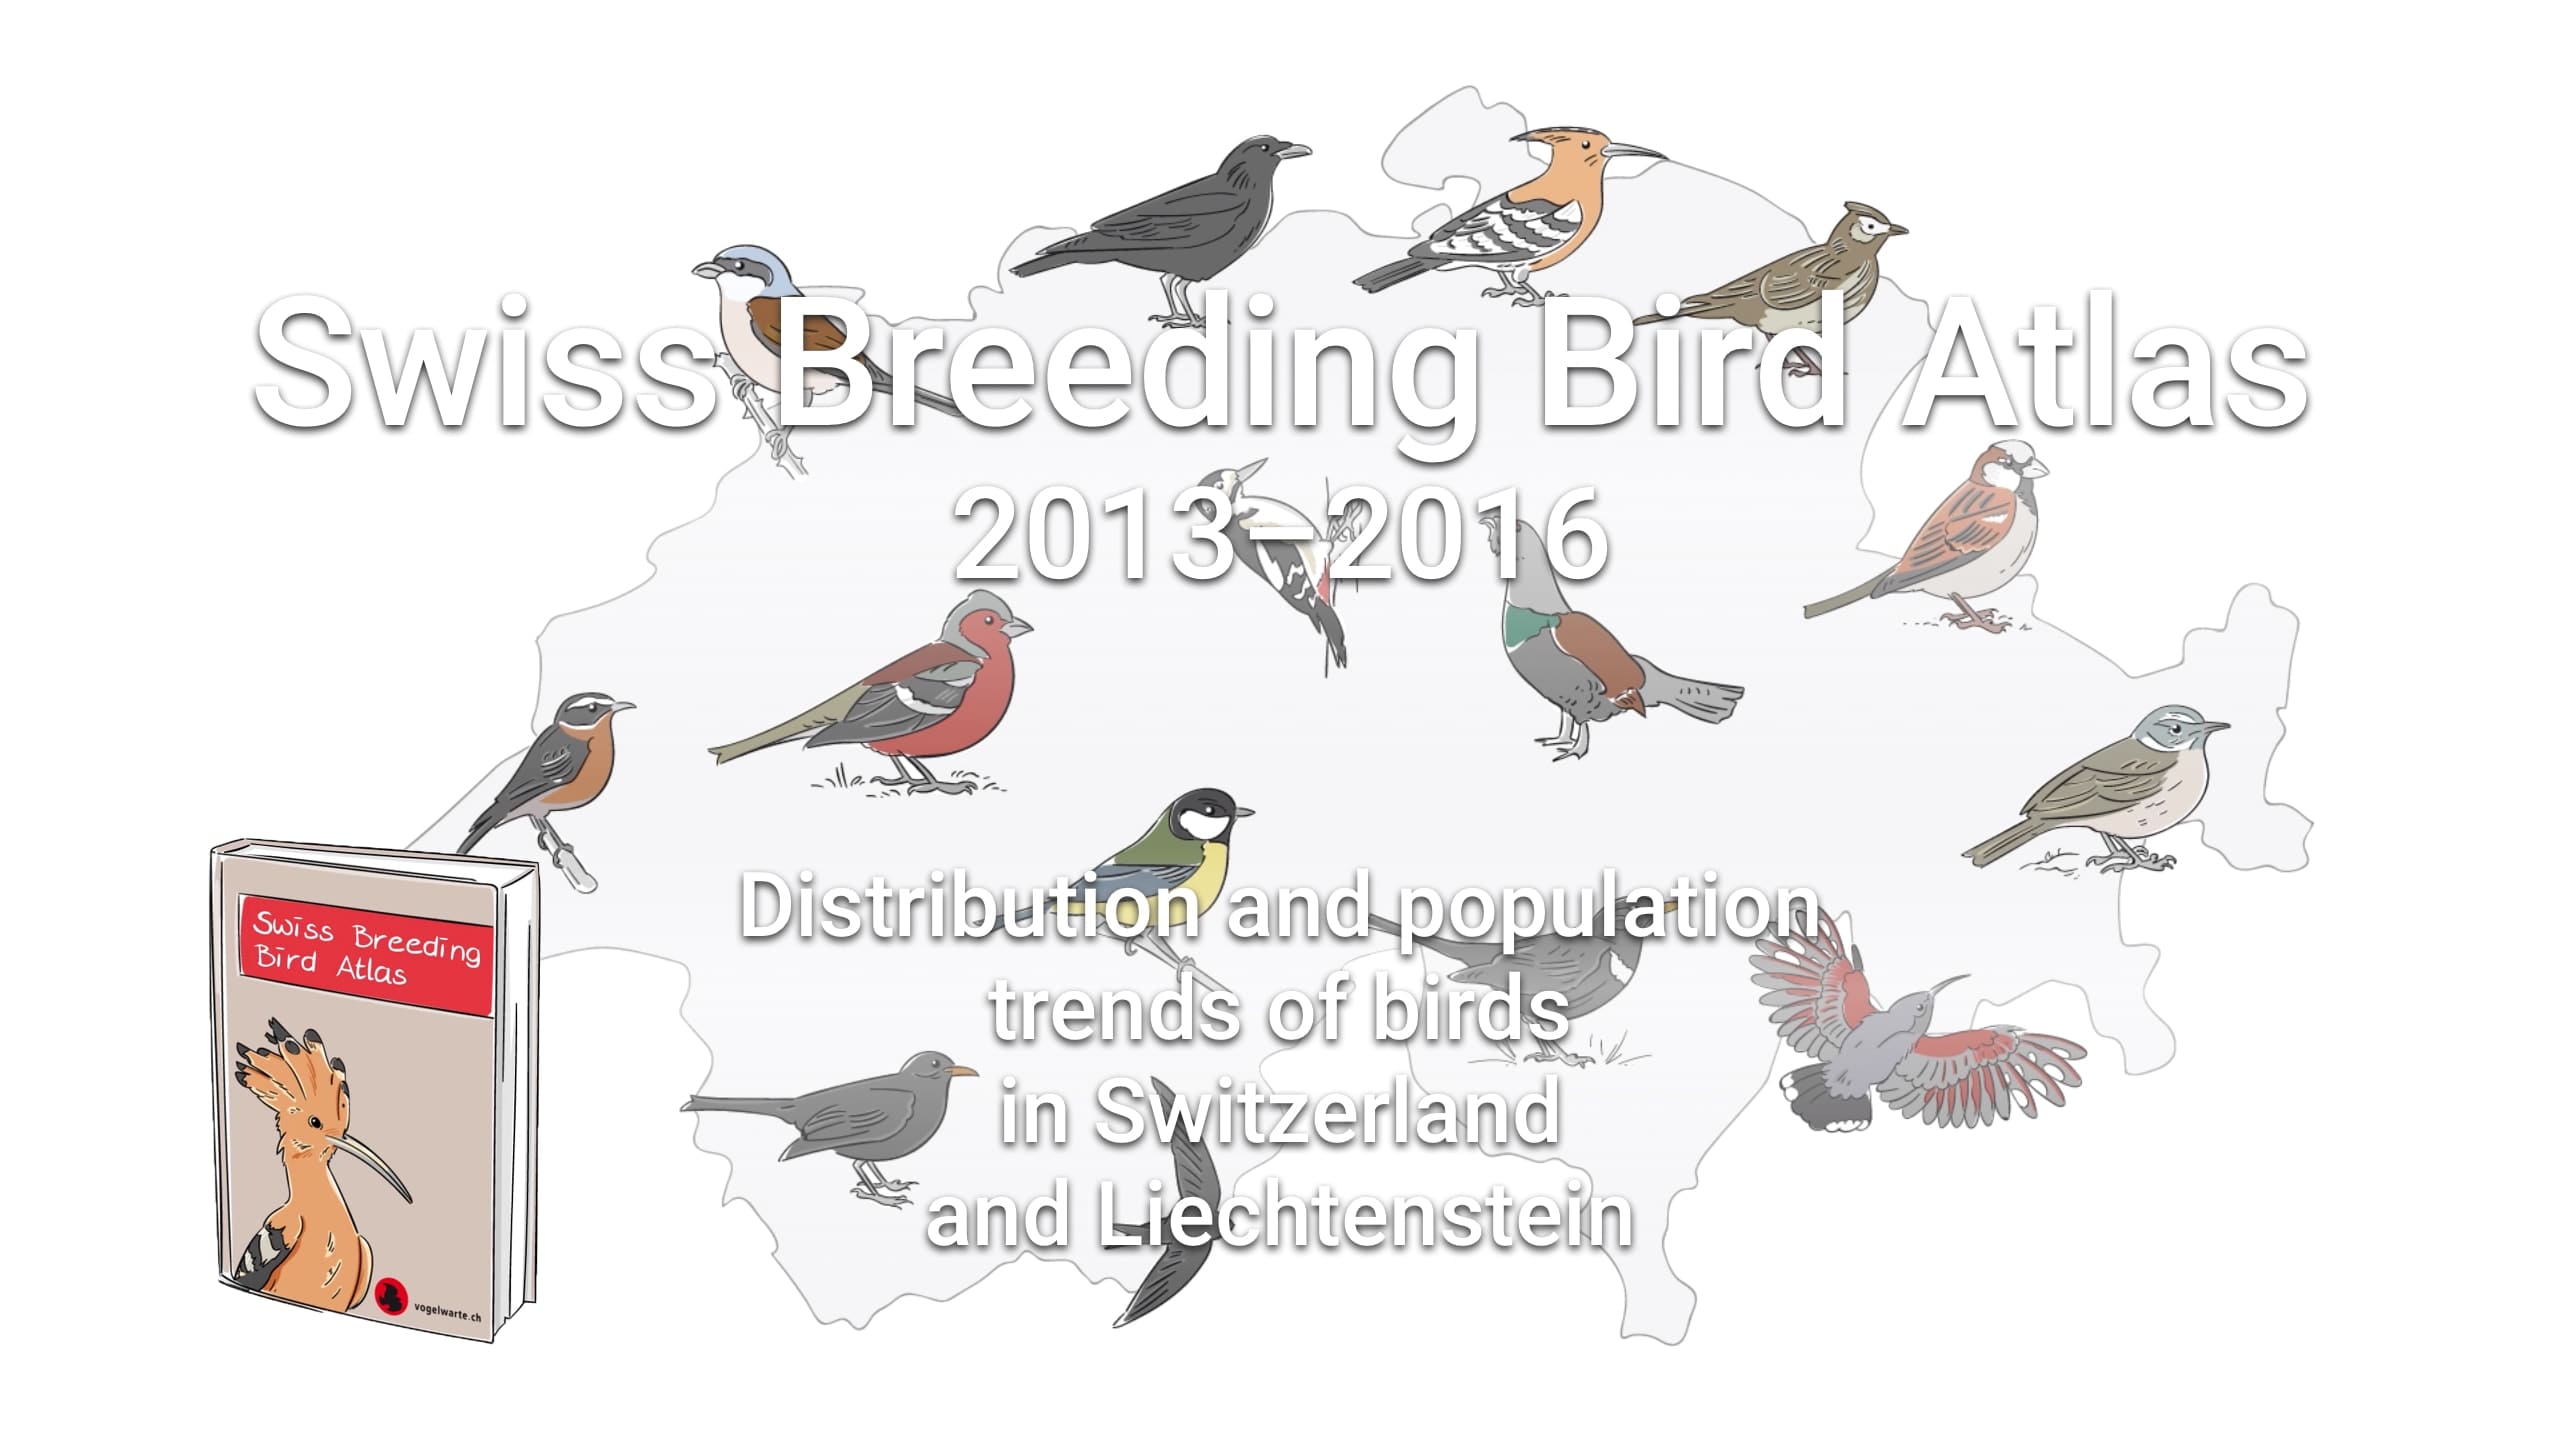 Swiss Breeding Bird Atlas (Kéry & Schmid 2006).